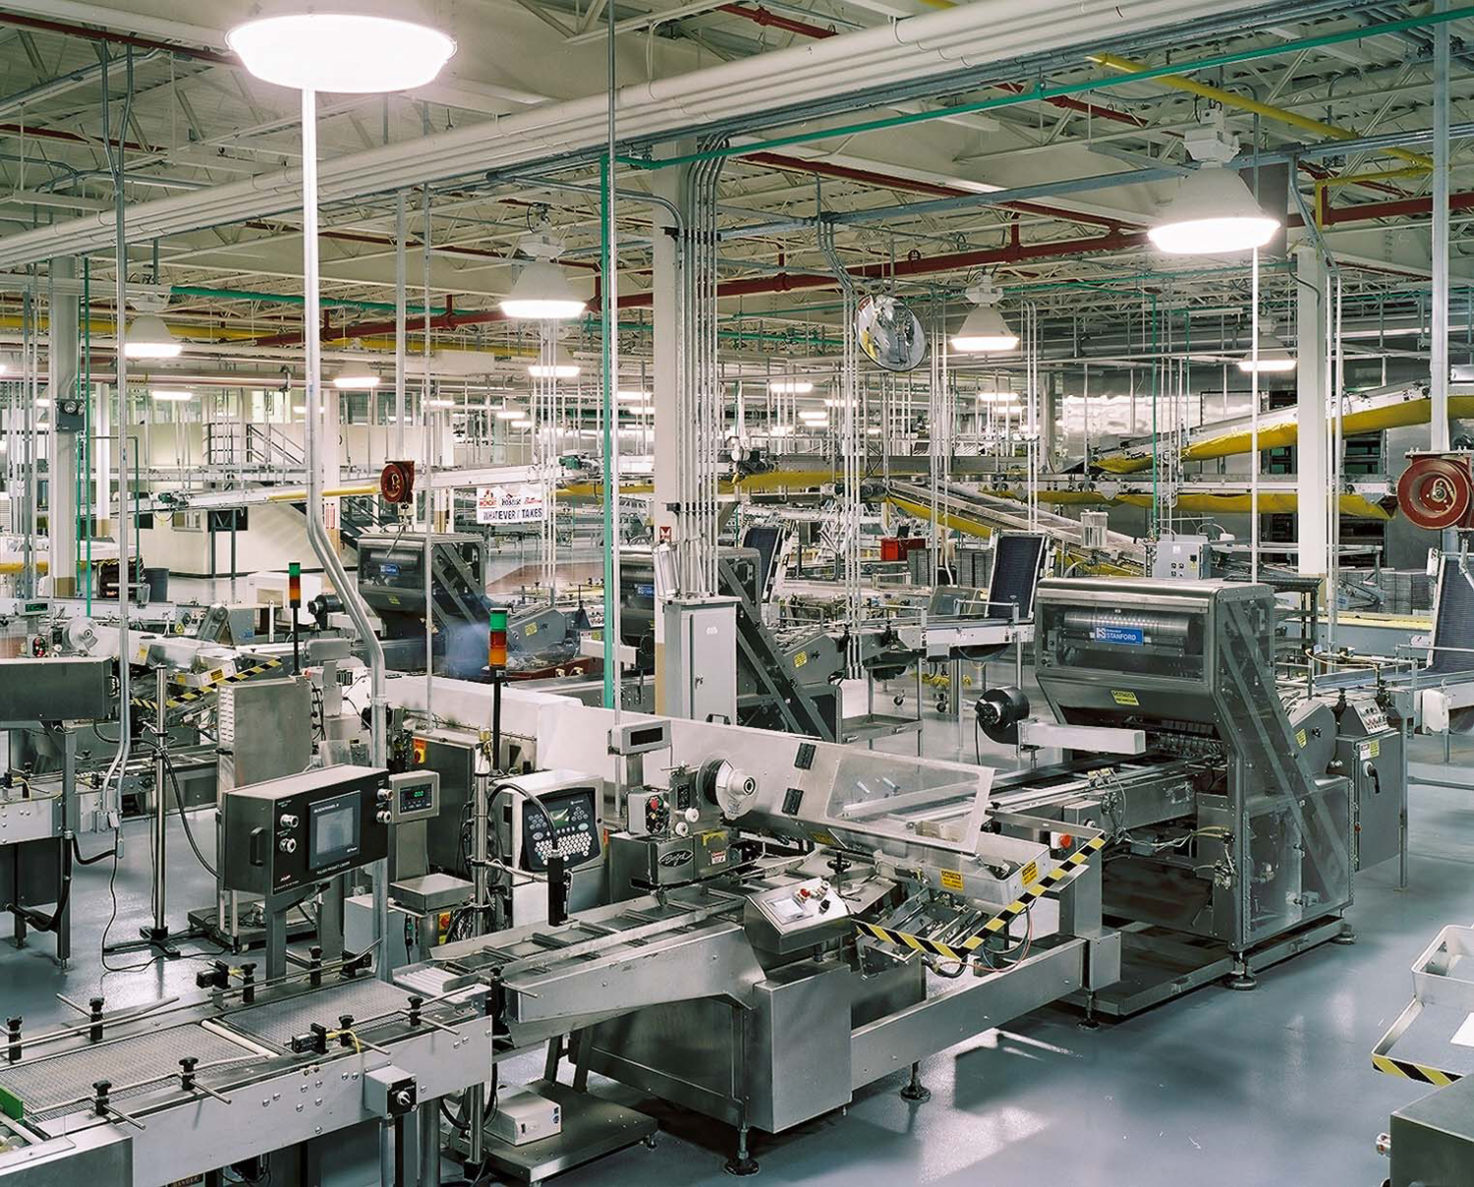 A manufacturing facility